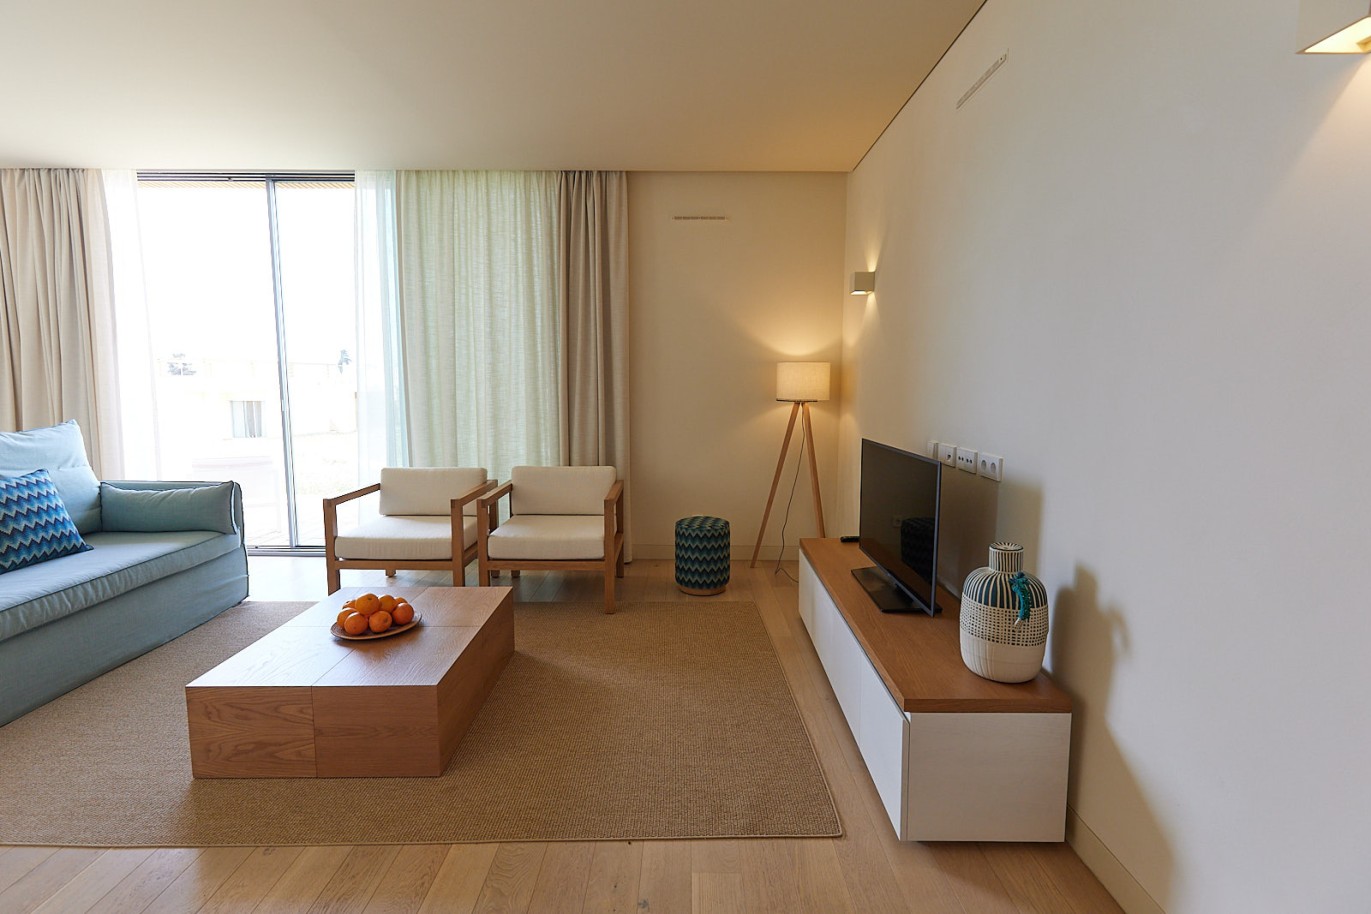 3 bedroom apartment in resort, for sale in Porches, Algarve_230739